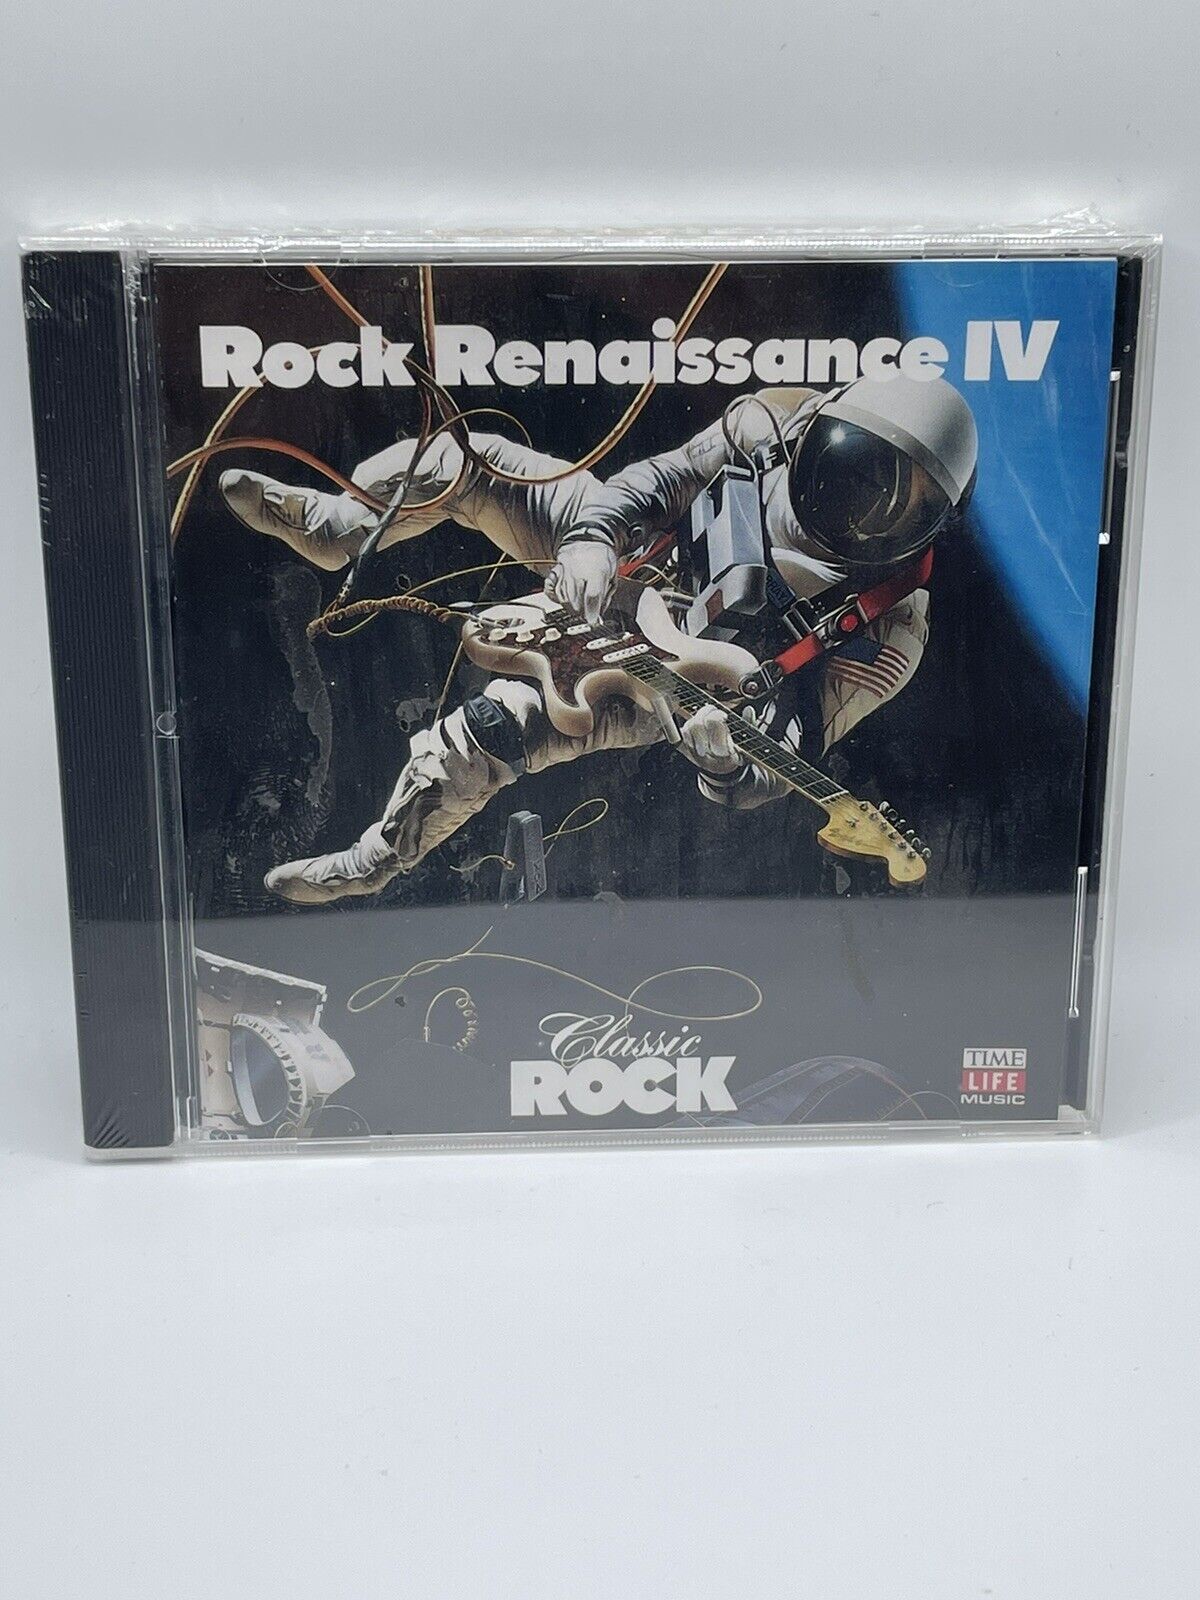 Time Life Classic Rock - Rock Renaissance IV CD New Sealed 0524